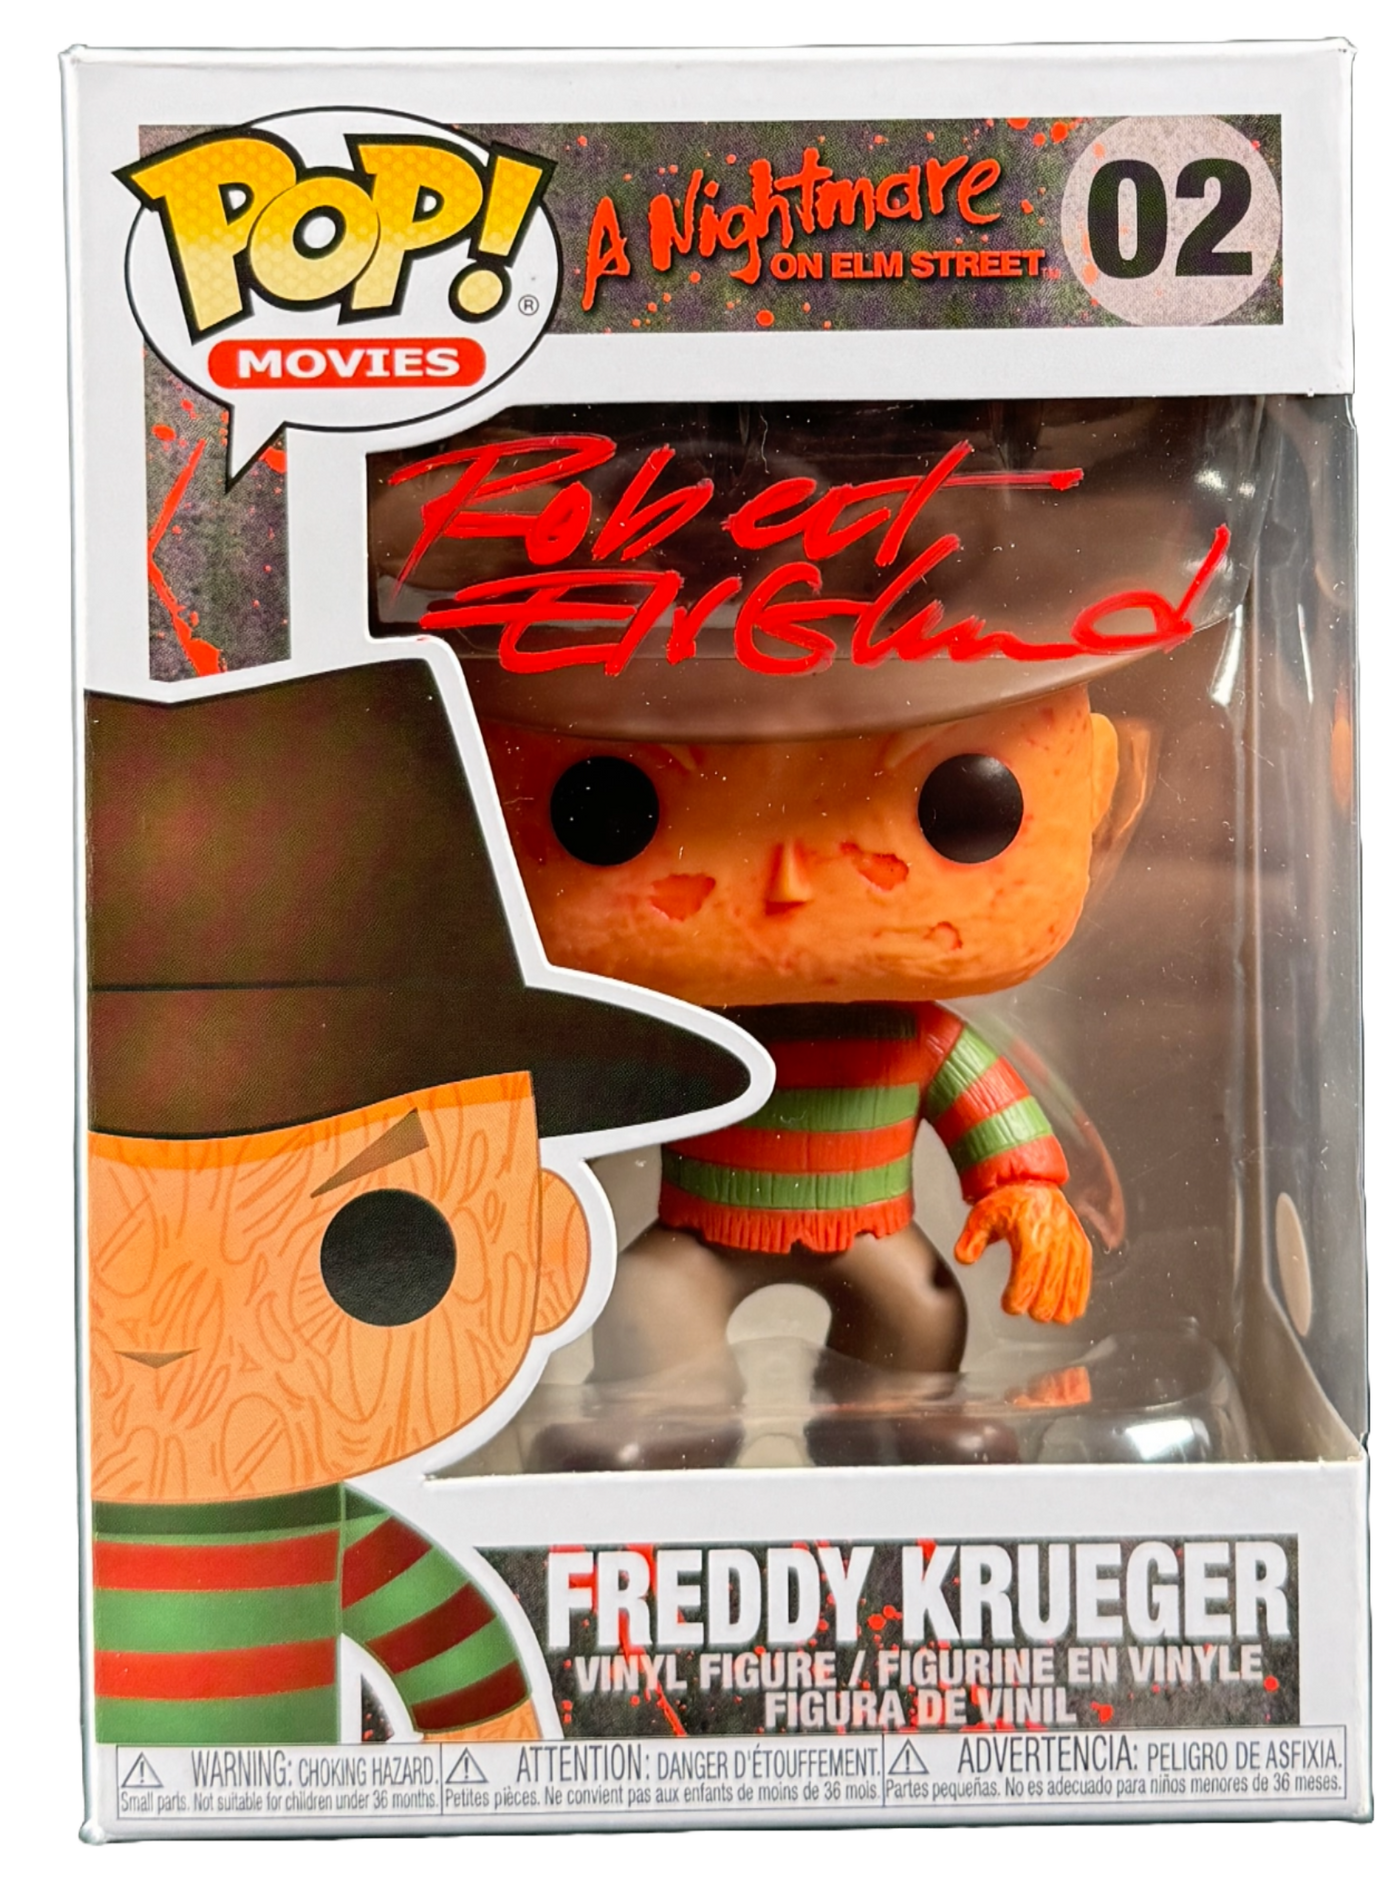 Robert Englund "Freddy Krueger" Signed Funko Pop #02 - A Nightmare on Elm Street with JSA COA